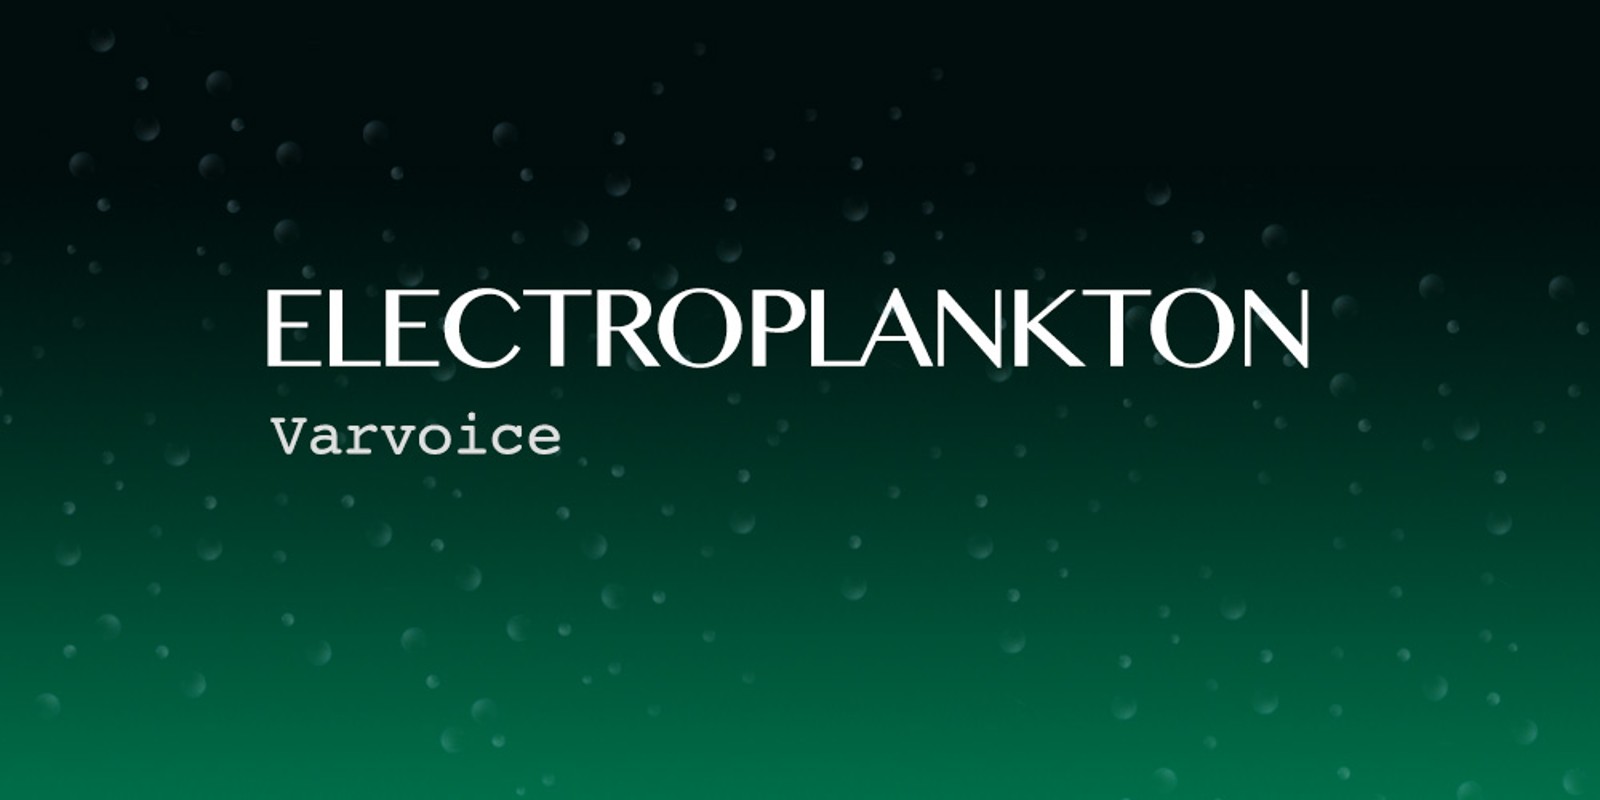 Electroplankton™ Varvoice